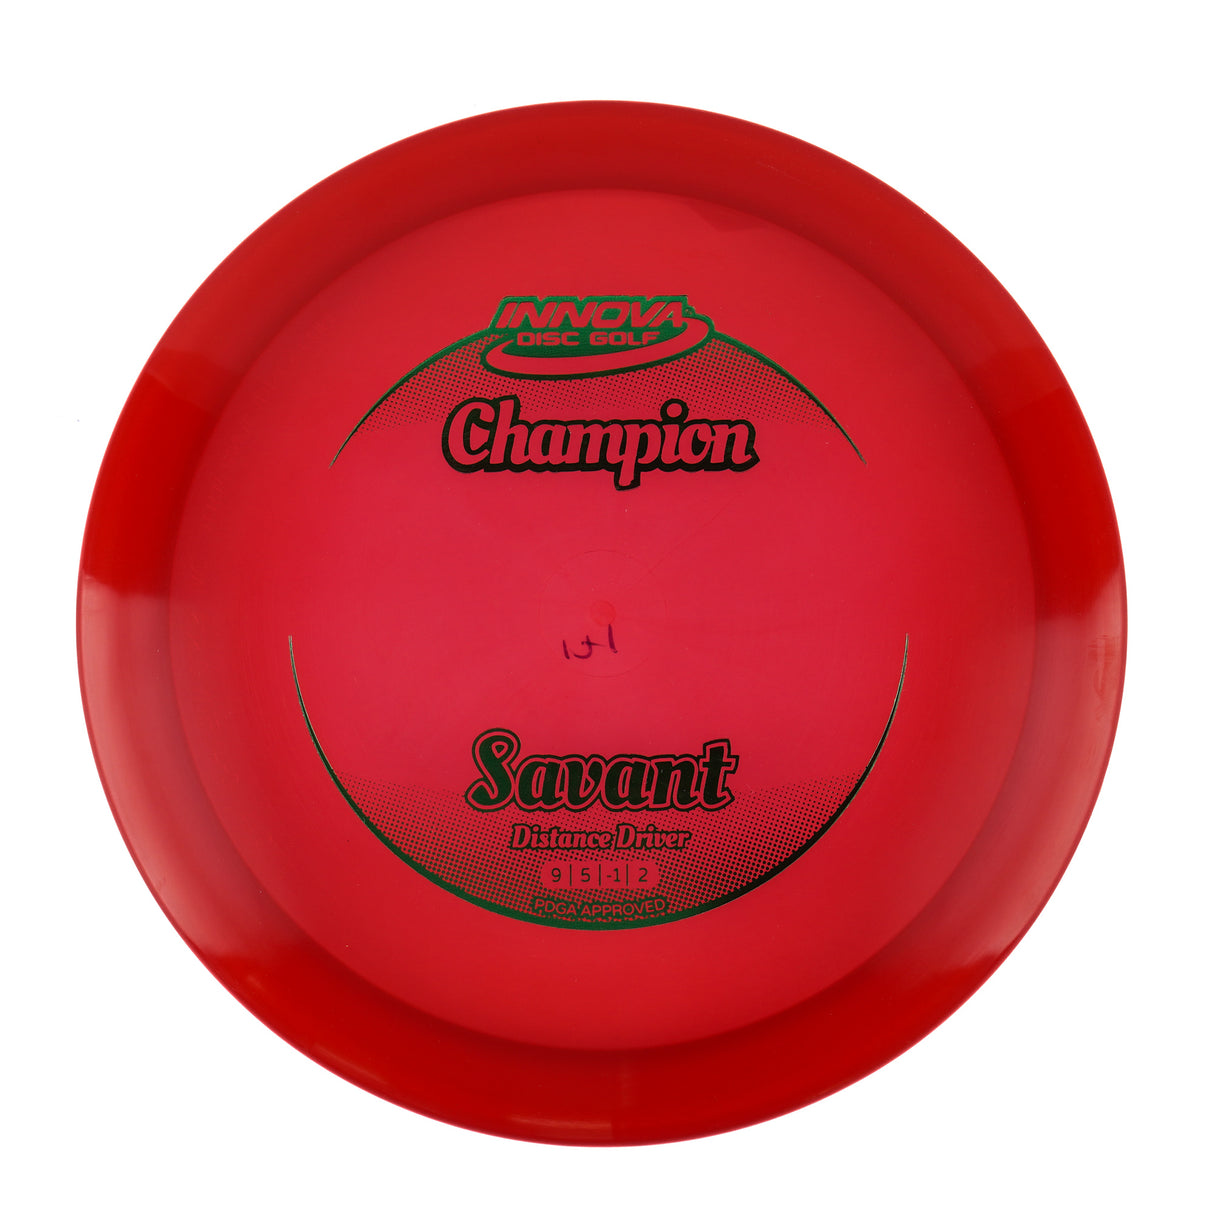 Innova Savant - Champion 173g | Style 0002